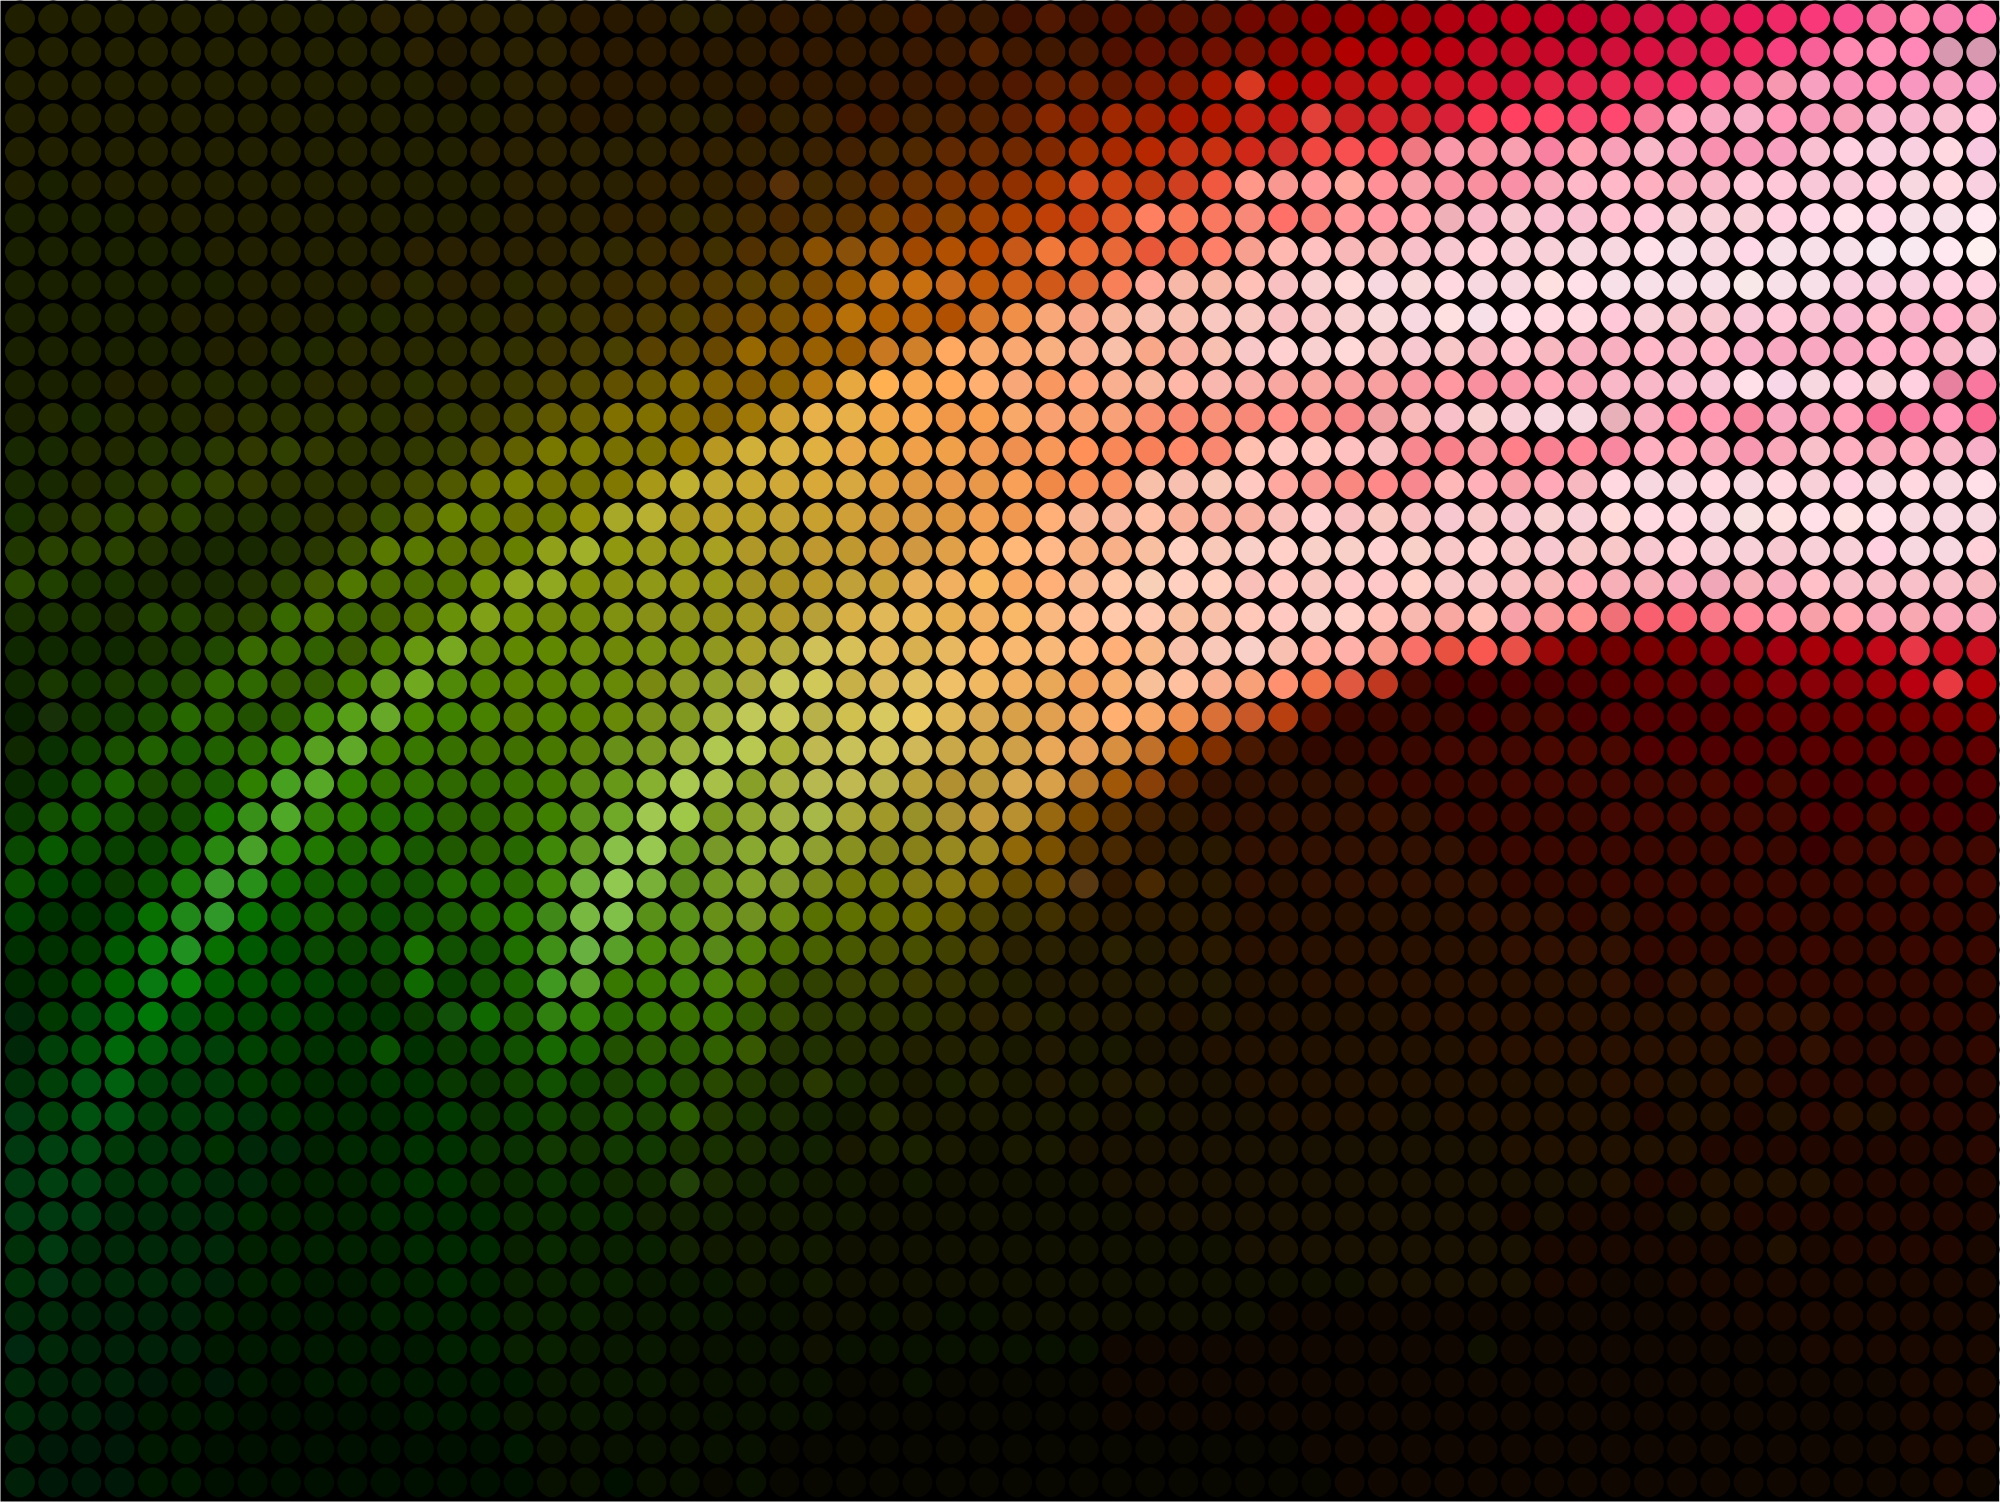 Brilliant neon color background image 10 vector Free Vector / 4Vector